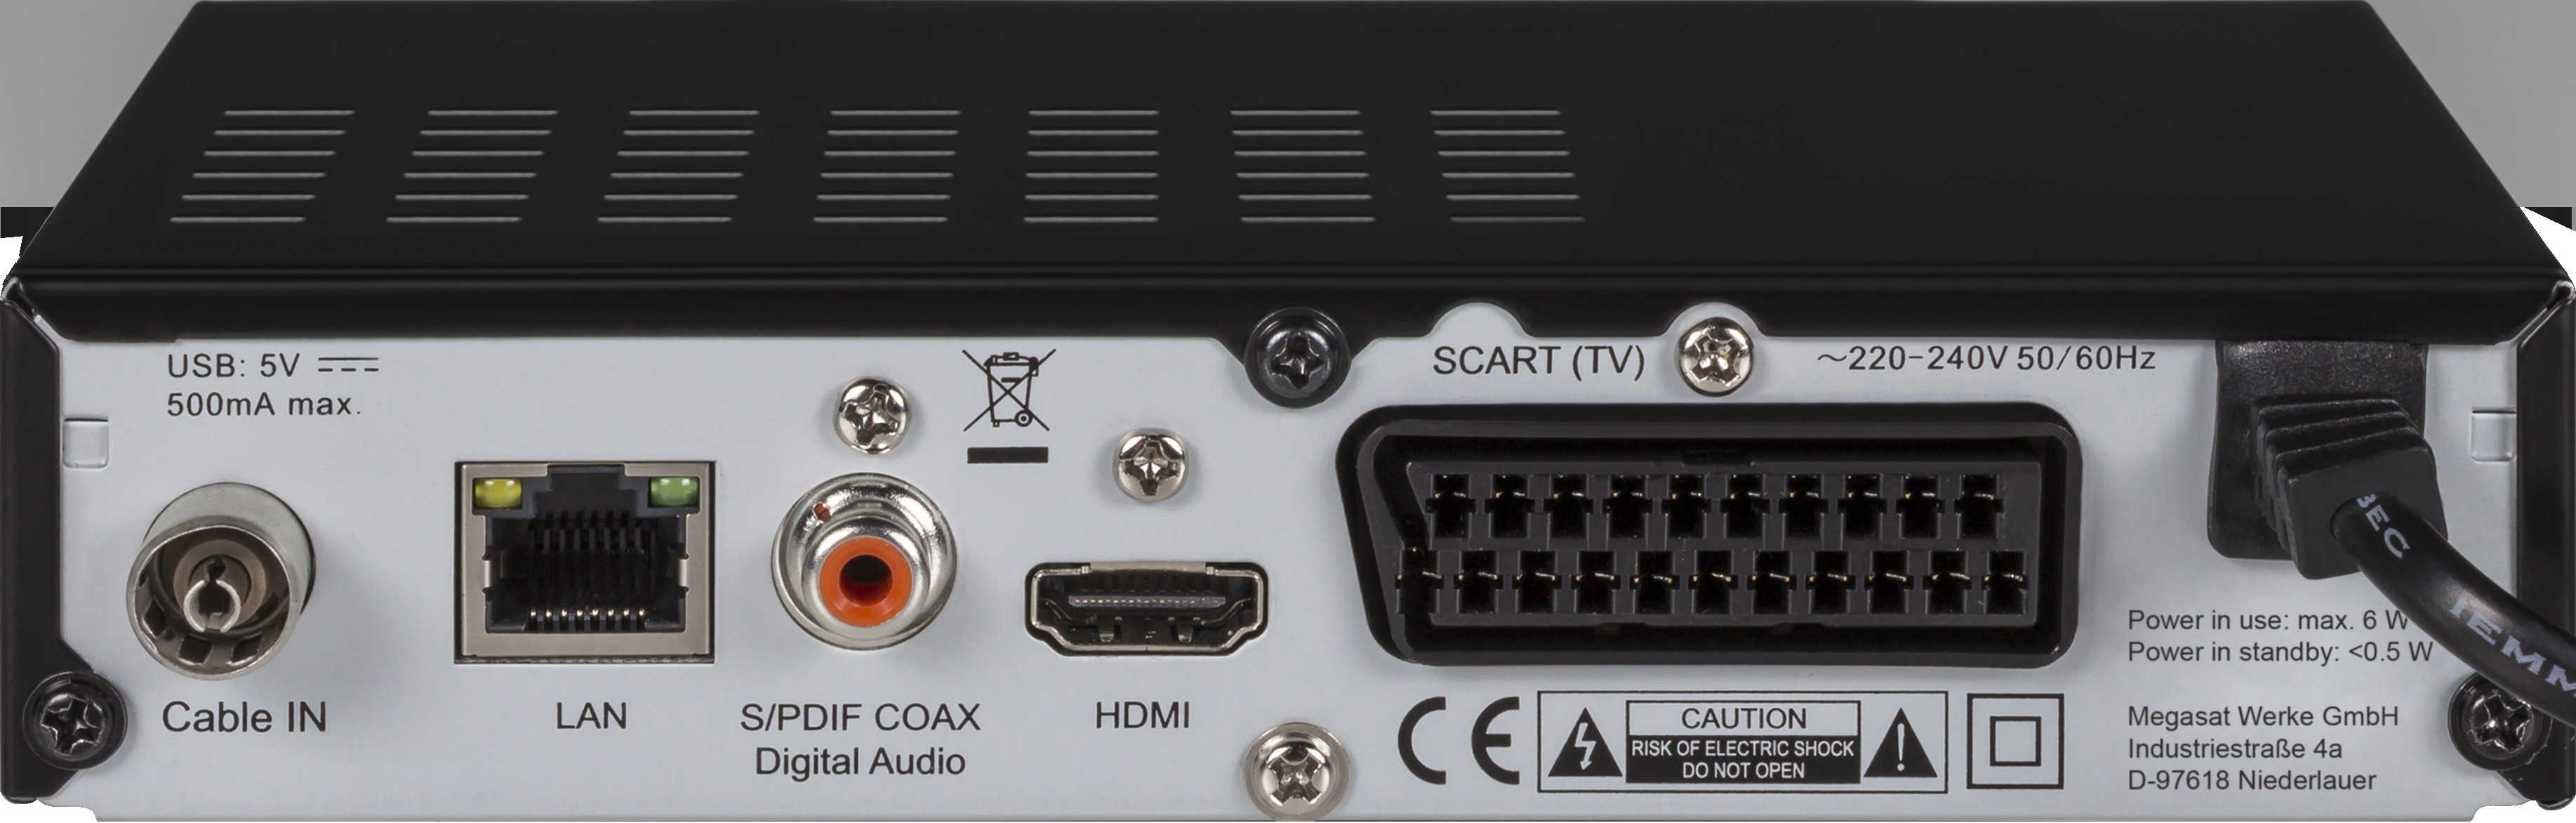 MEGASAT HD 200 C DVB-C Schwarz) DVB-C2, DVB-C, (HDTV, Receiver